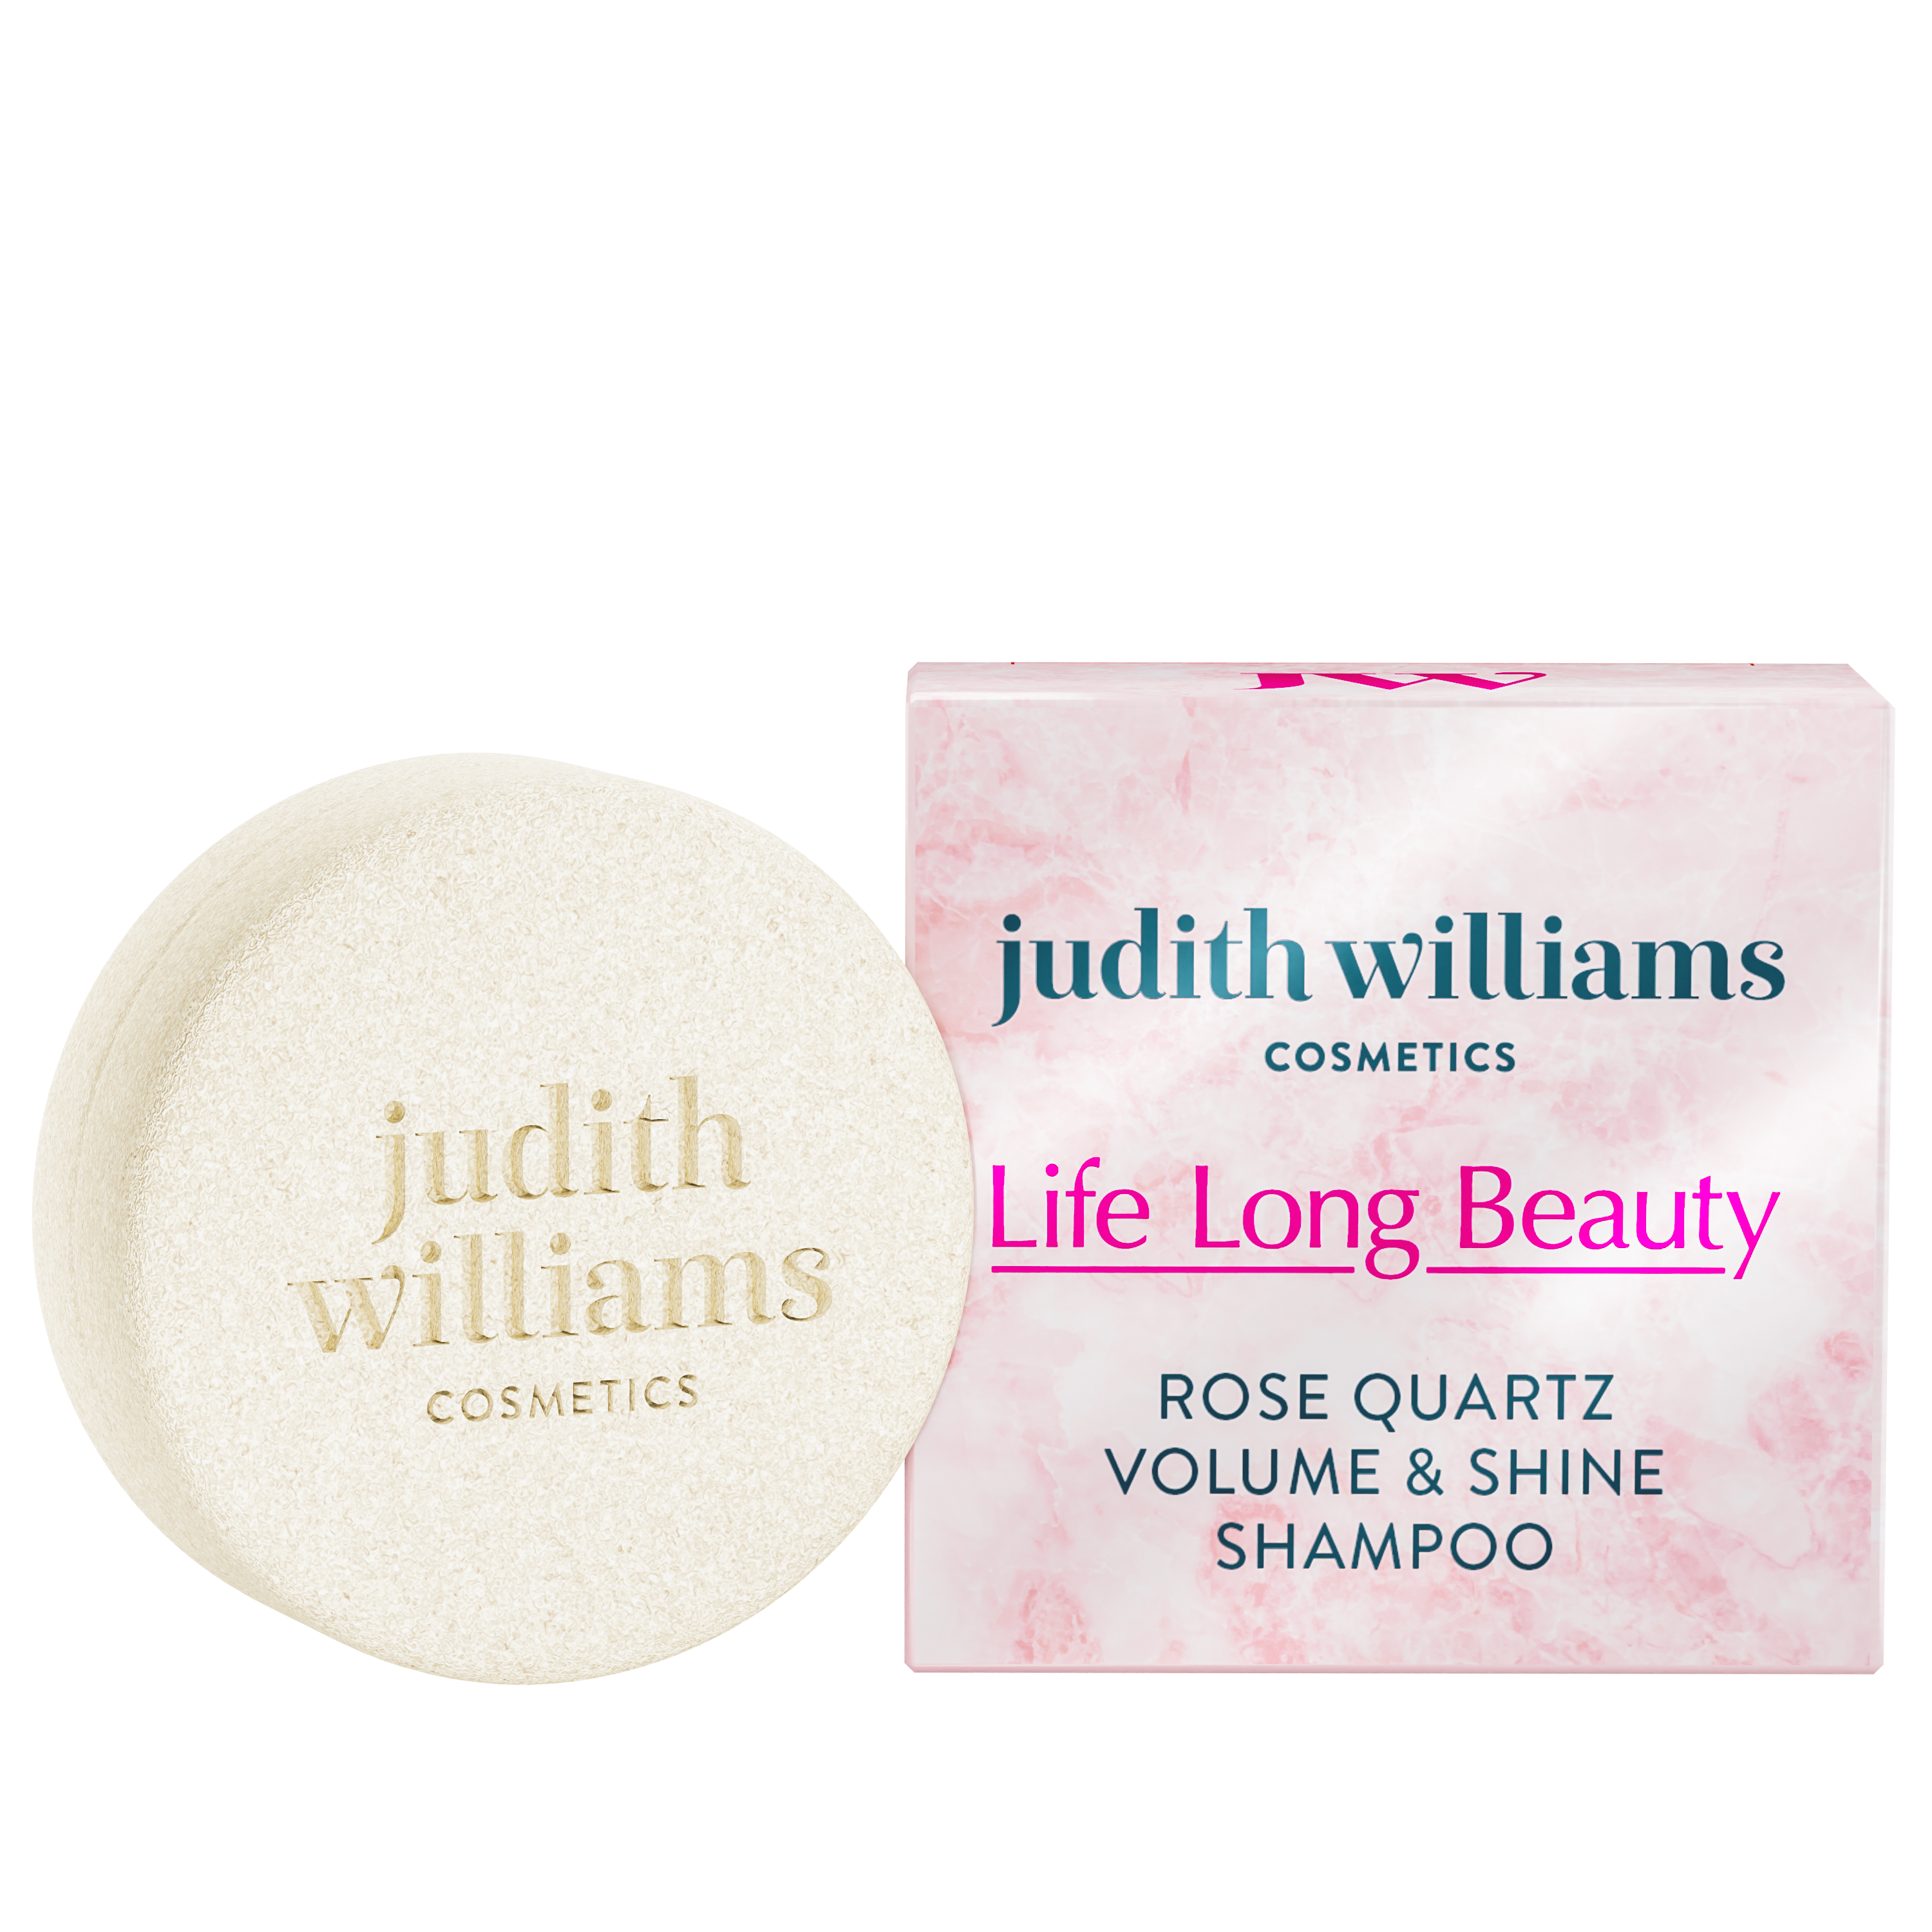 Shampoo | Life Long Beauty | Rose Quartz Volume & Shine Shampoo | Judith Williams